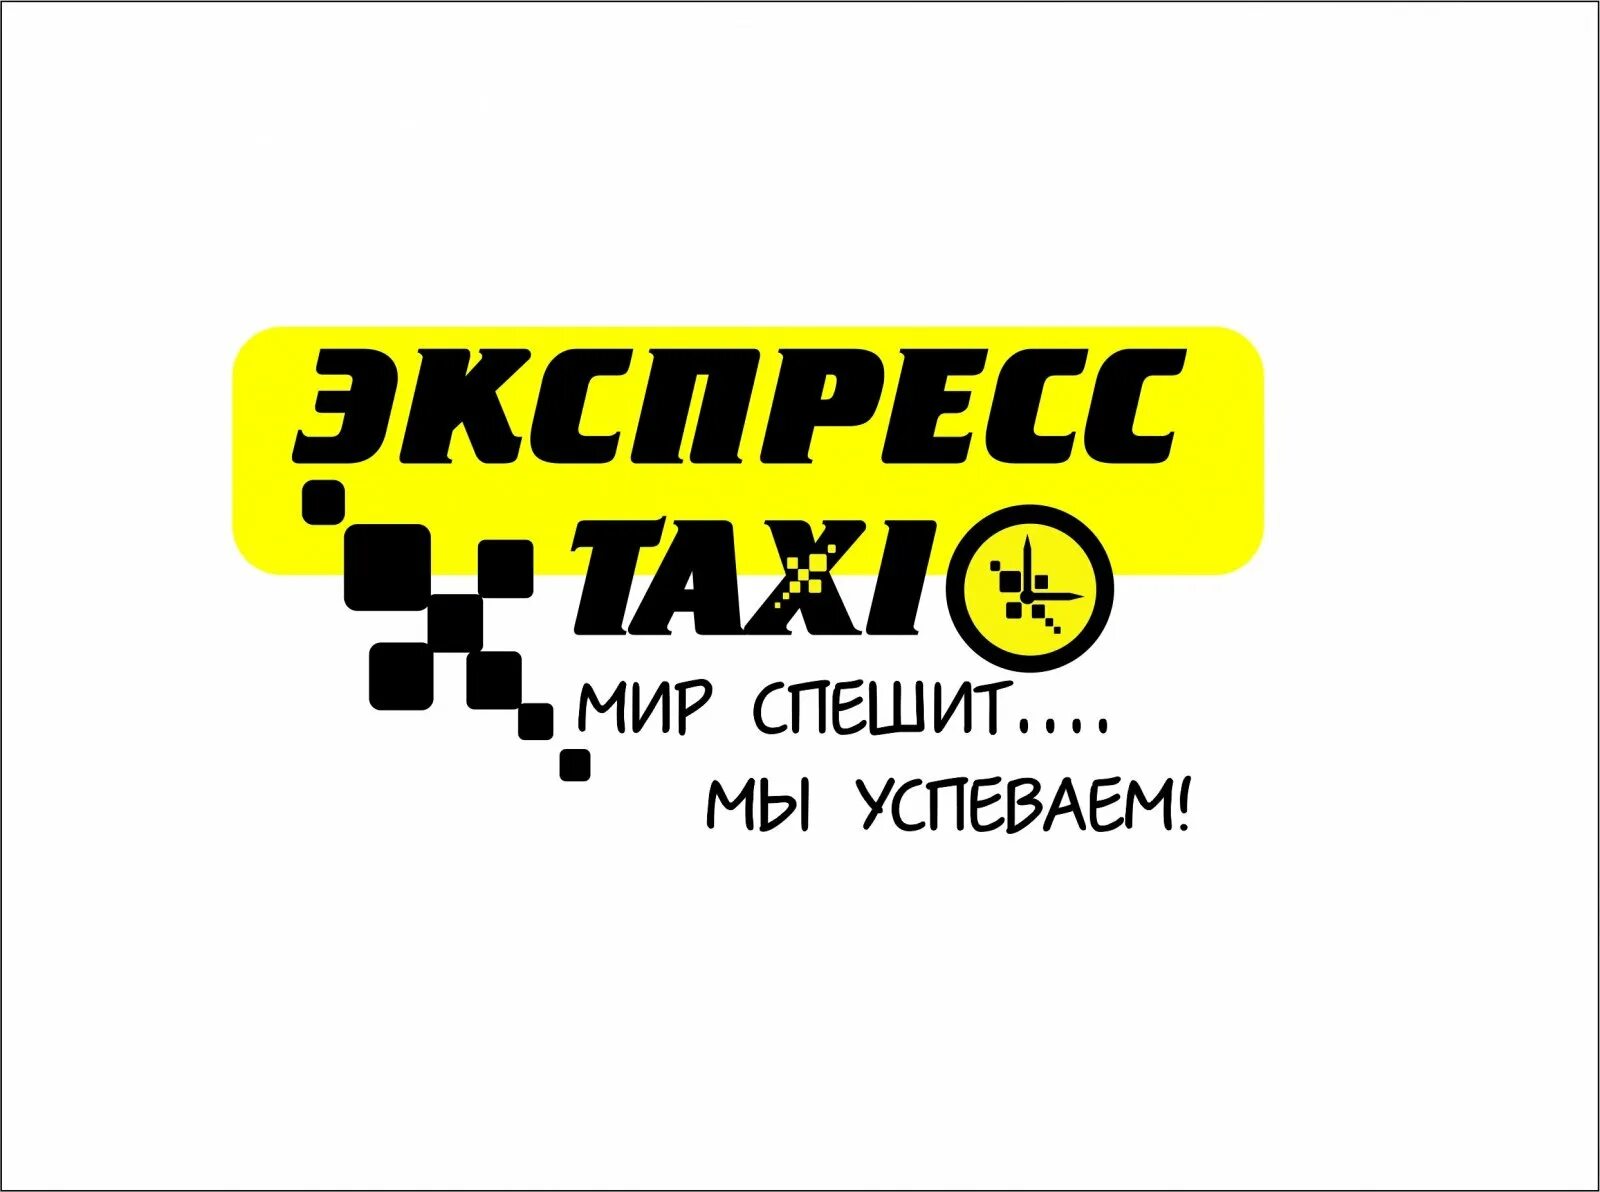 Такси экспресс. Такси надпись. Логотип такси. Аватарка такси. Такси саянск